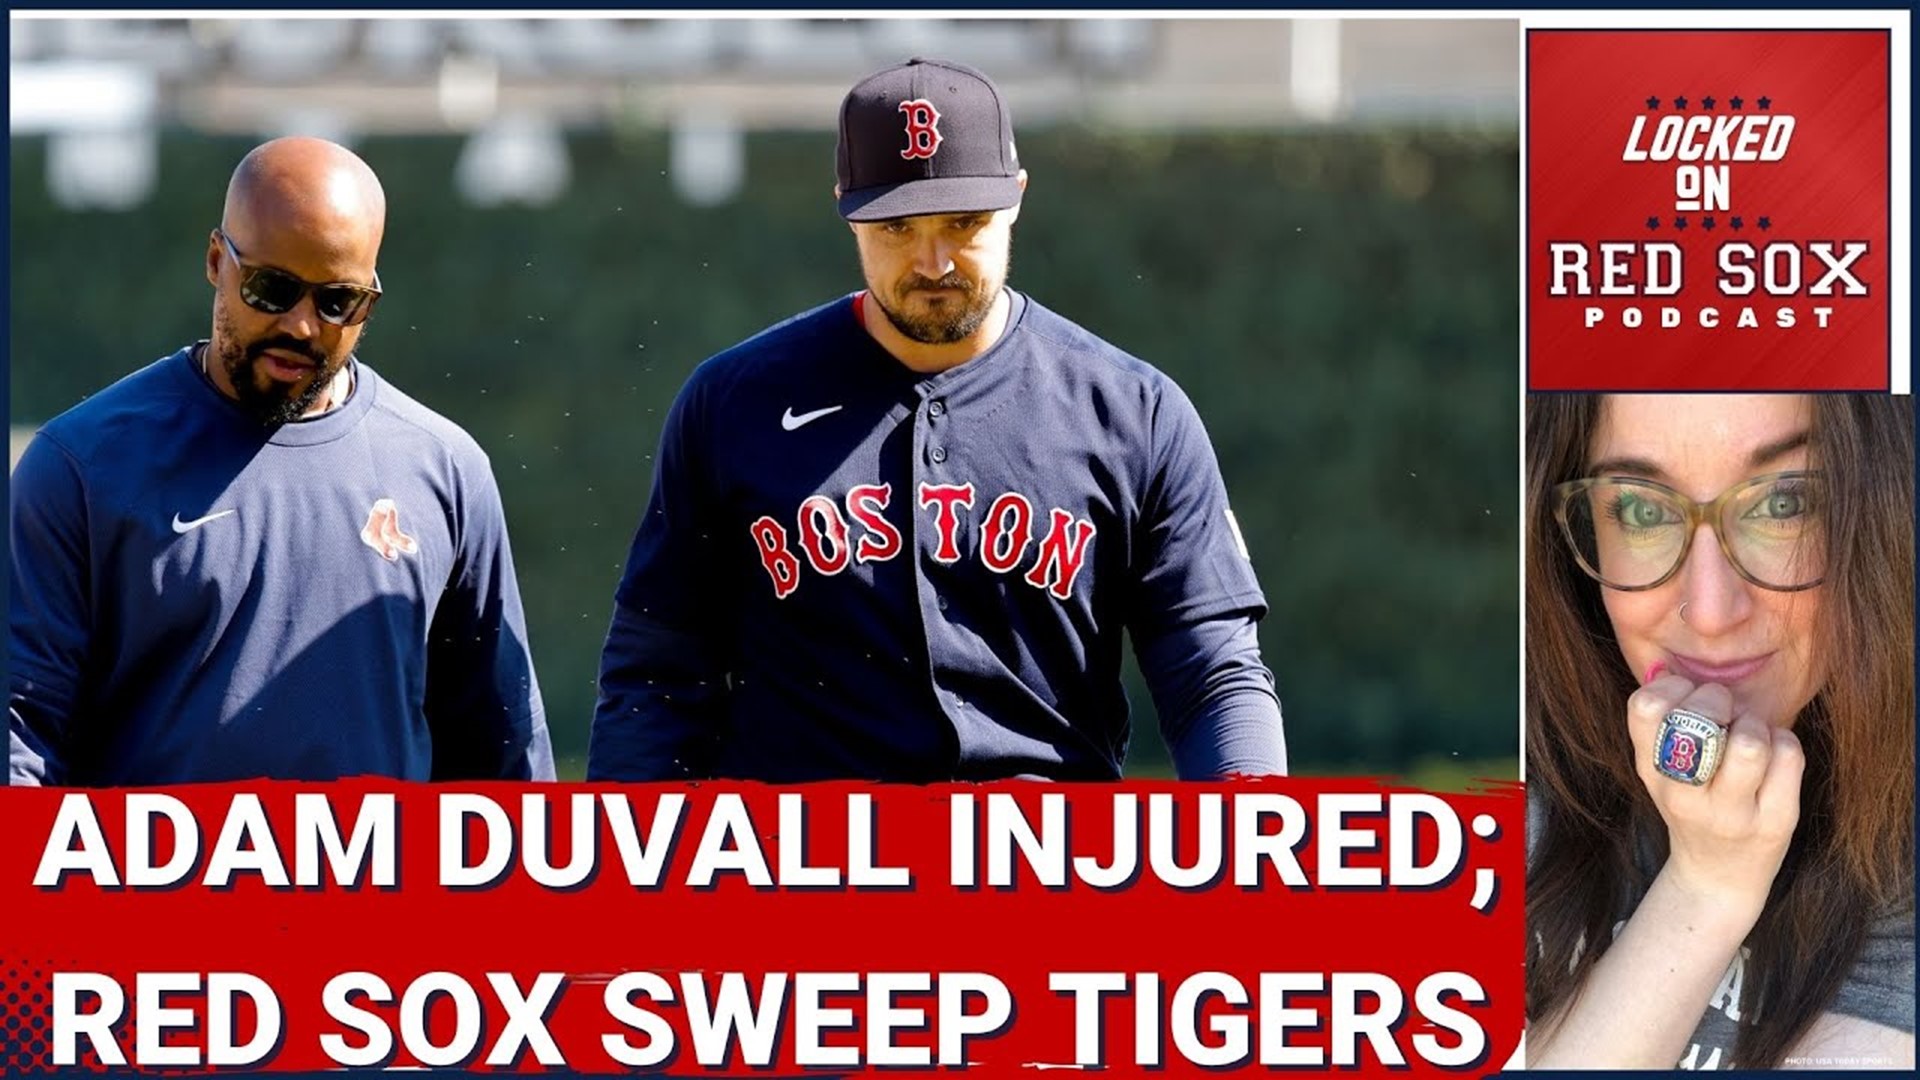 Adam Duvall wrist injury sends Red Sox slugger to IL